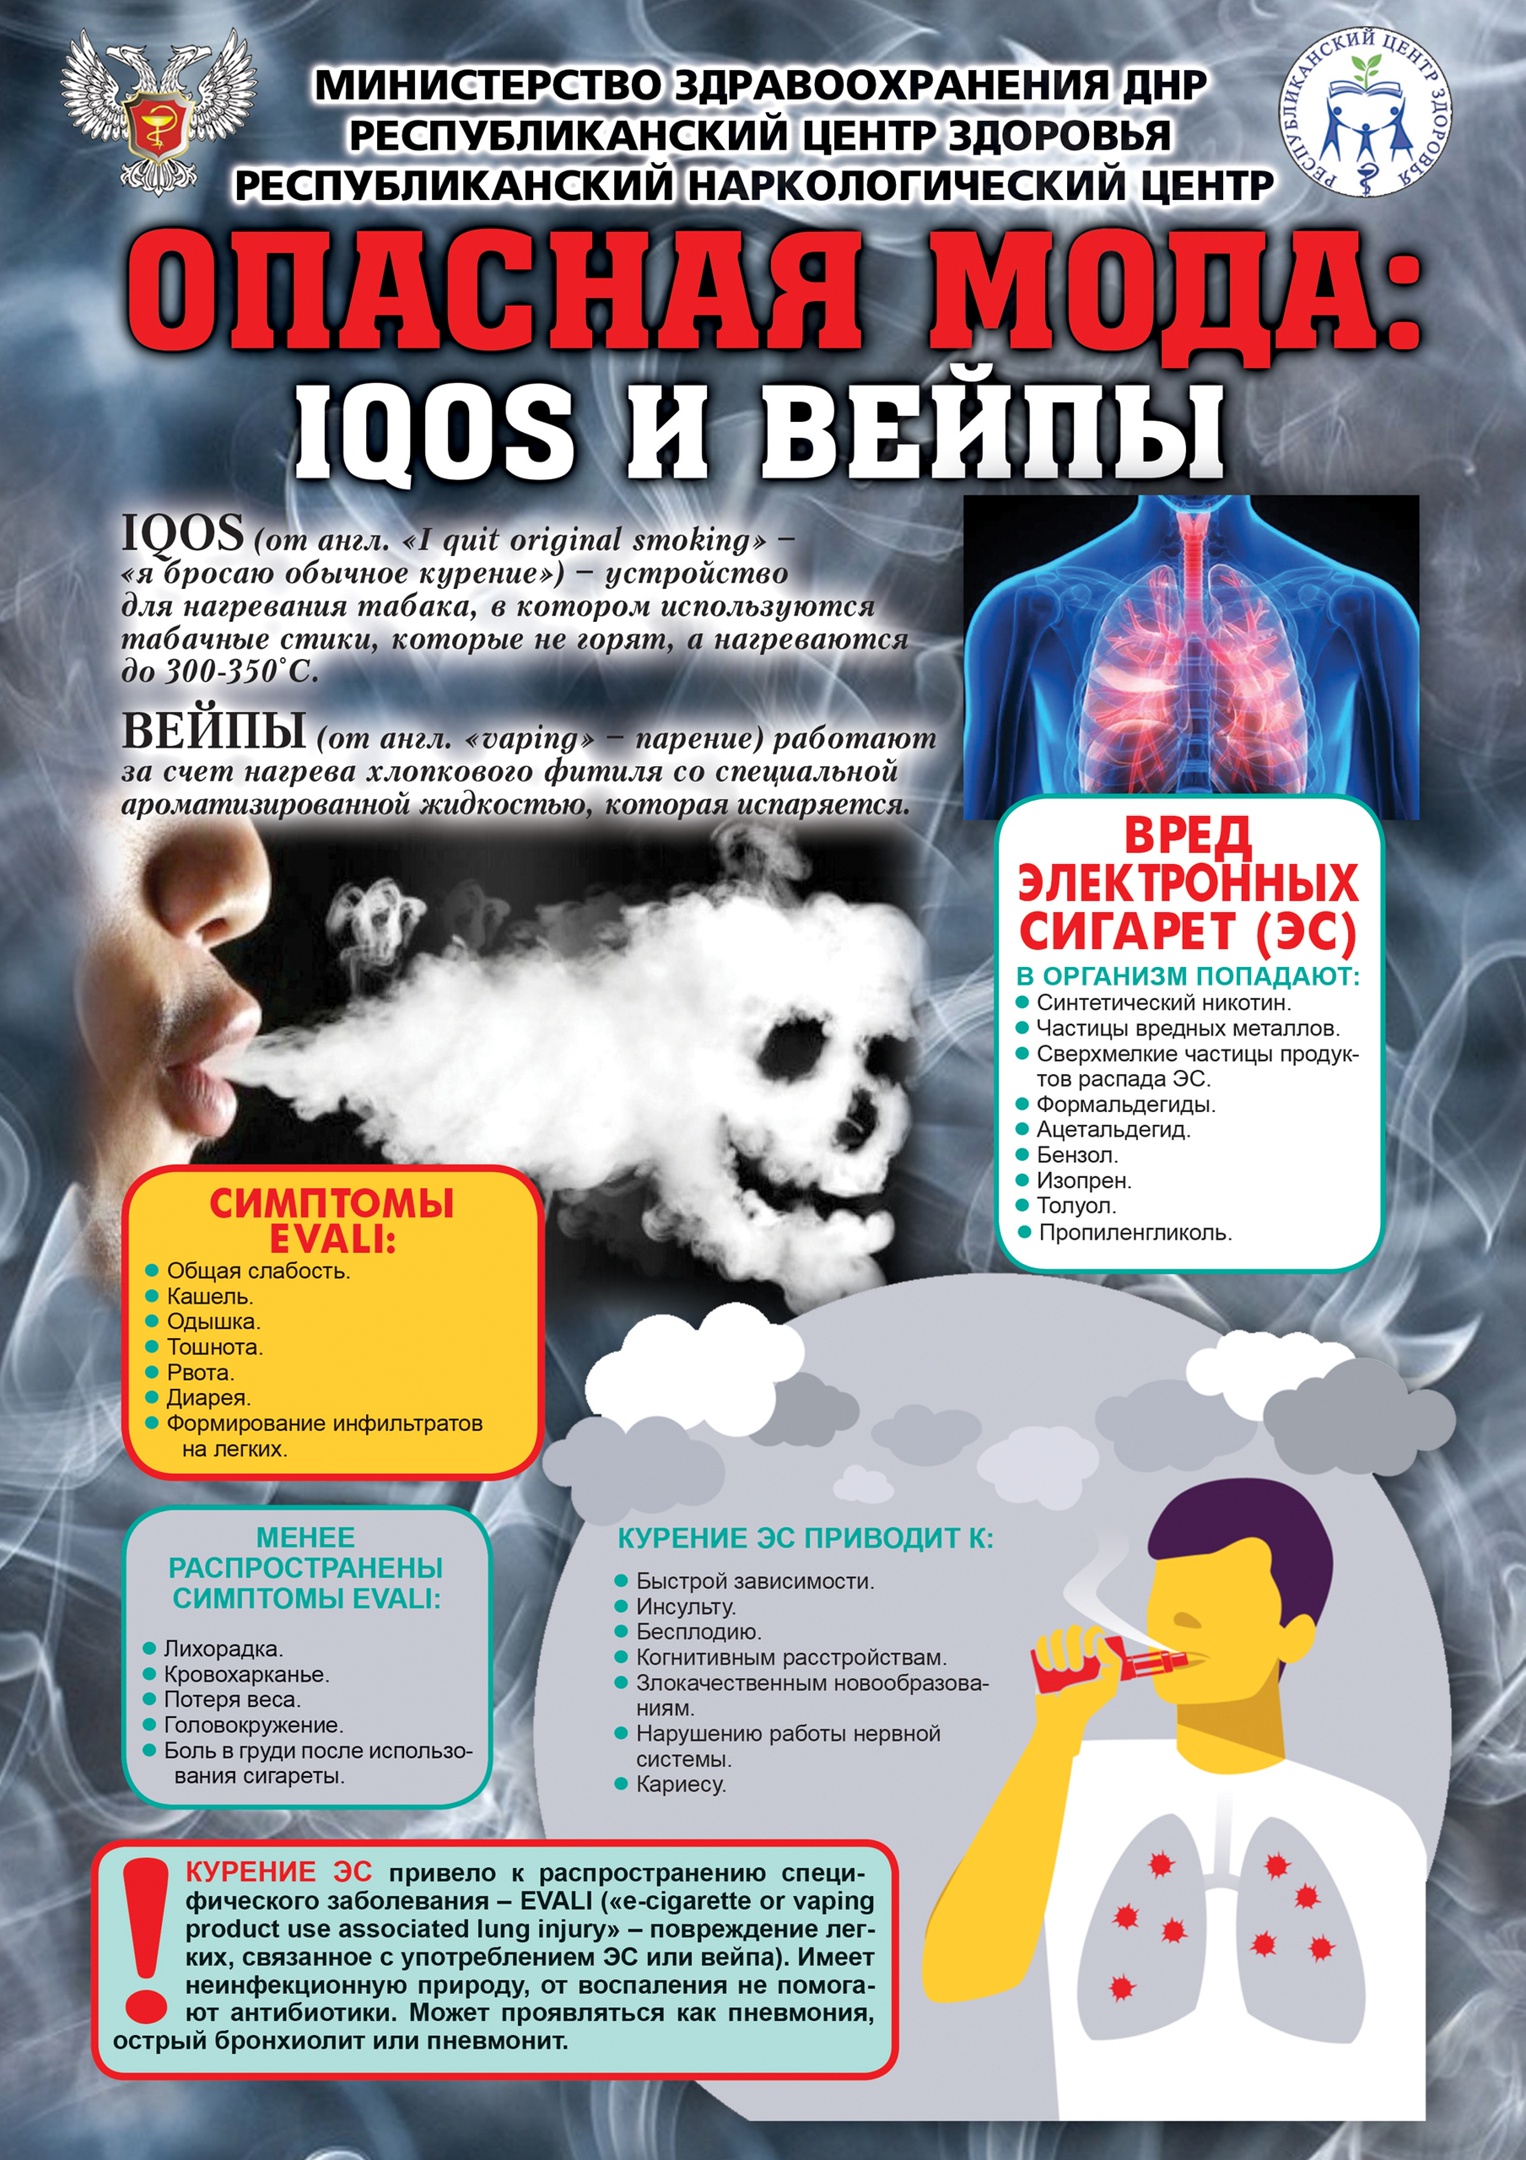 Профилактика табакокурения: вред электронных сигарет — Горловка